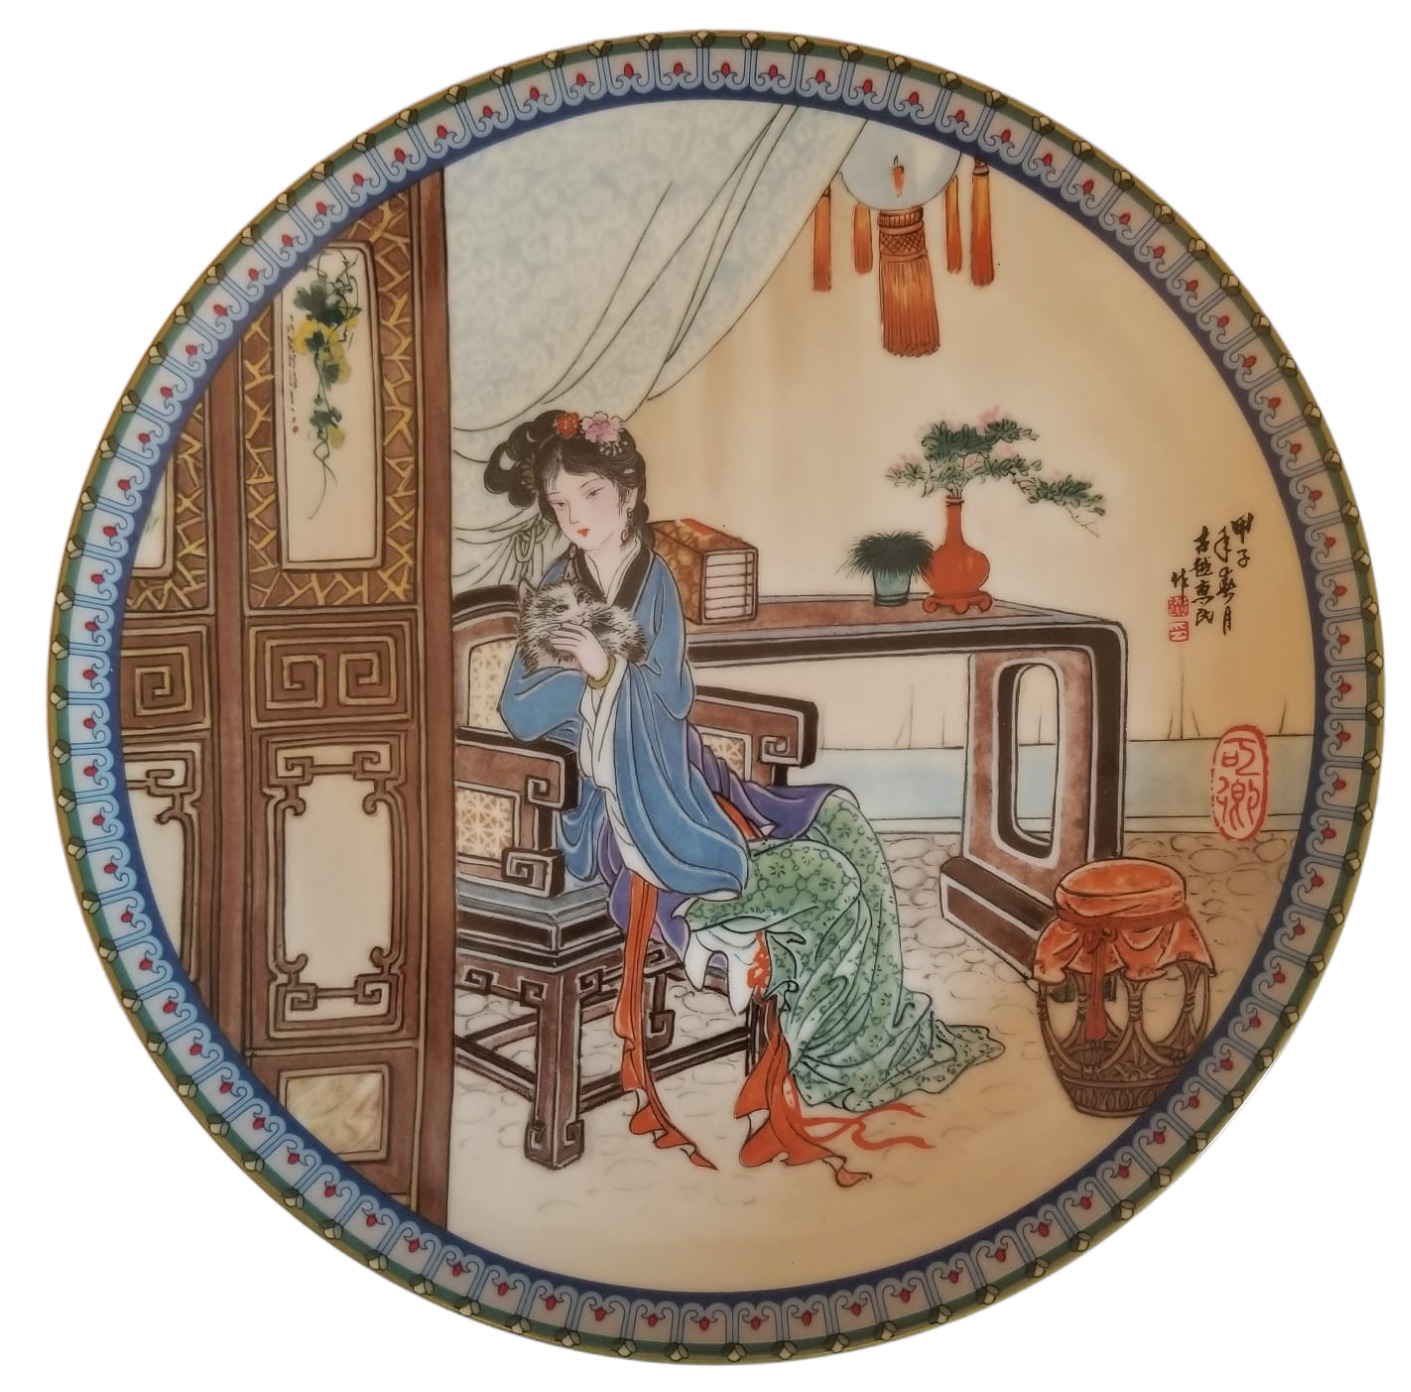 Vintage Chinese Decorative Imperial Jingdezhen Porcelain Plate 1988